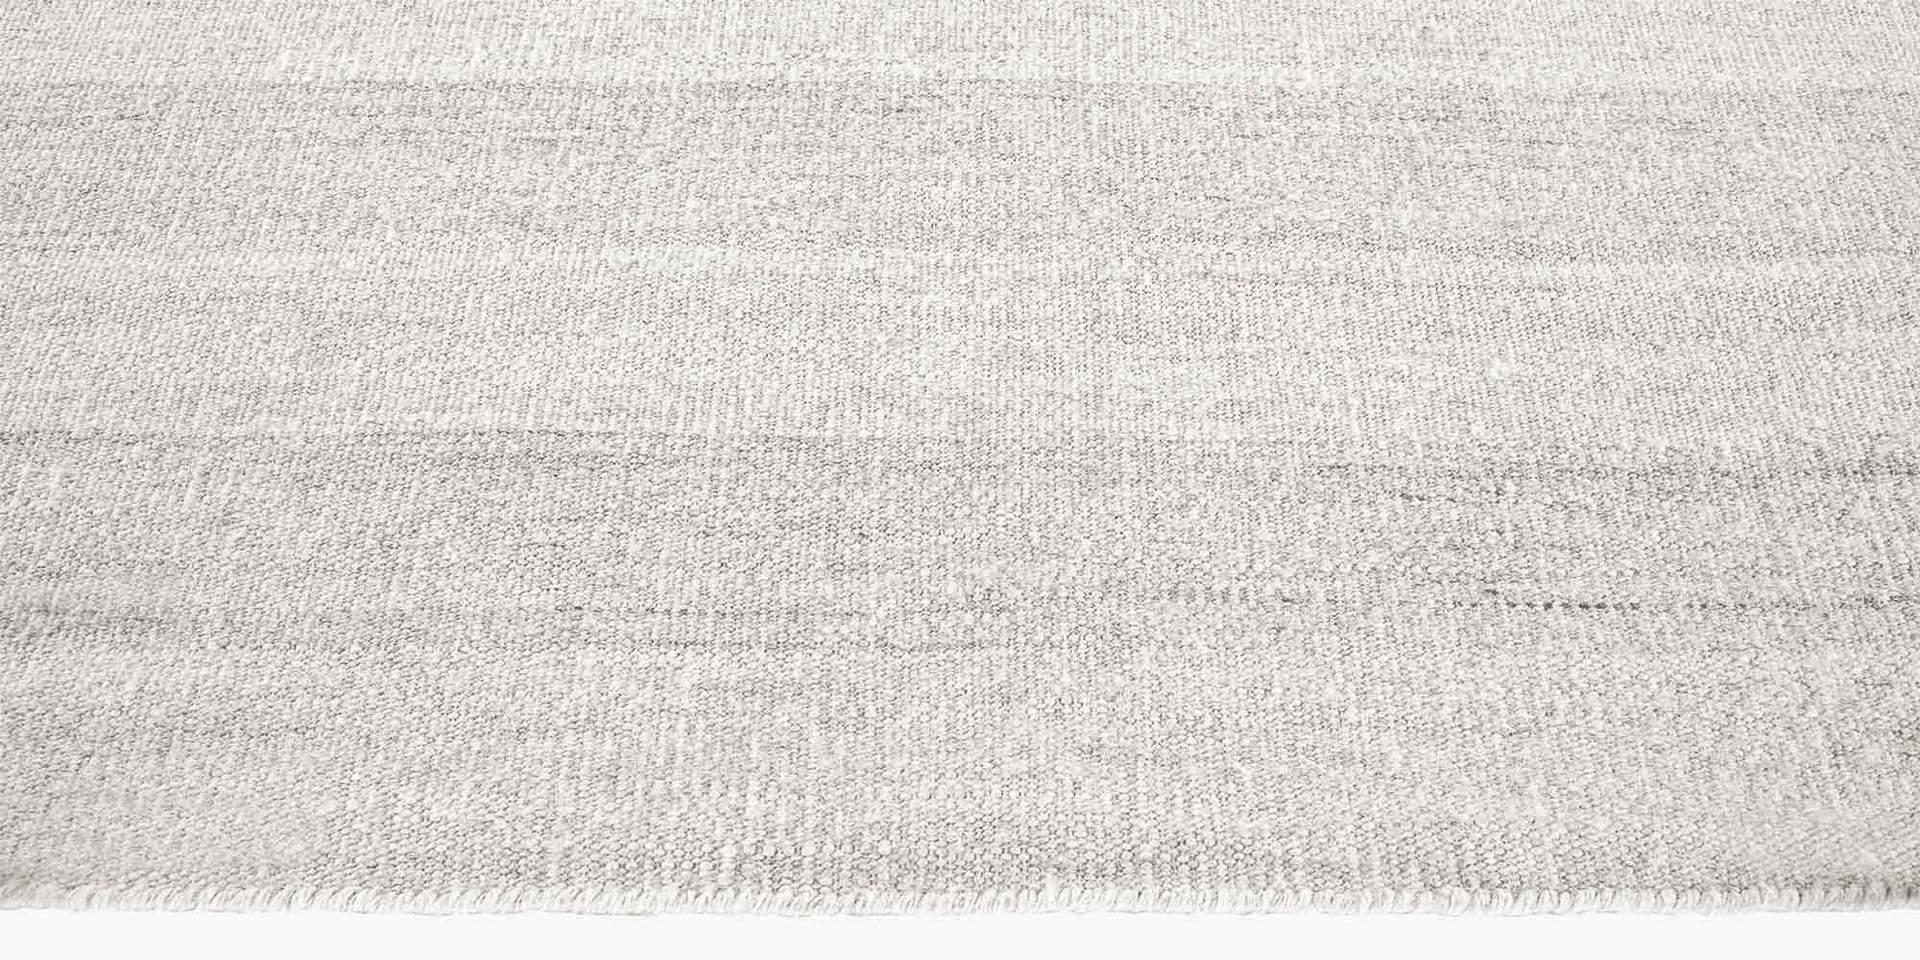 For Sale: Silver (Alterno Silver) Ben Soleimani Alterno Rug– Hand-woven Textured Soft Wool Sand 12'x15' 3